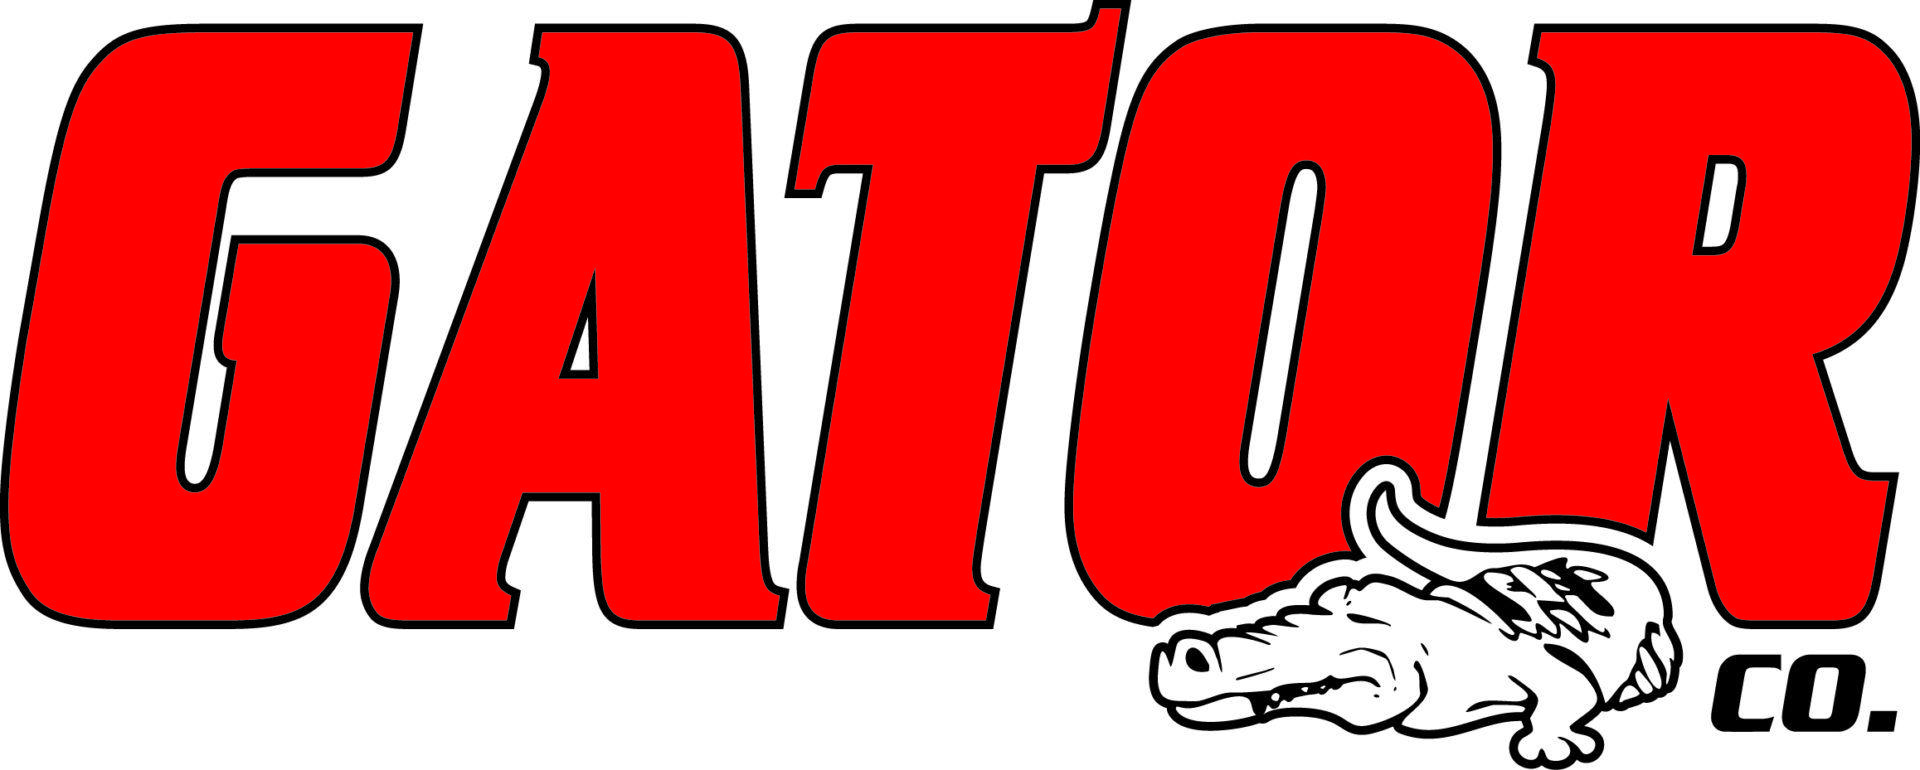 Red Gator Logo - Downloads - Gator Cases